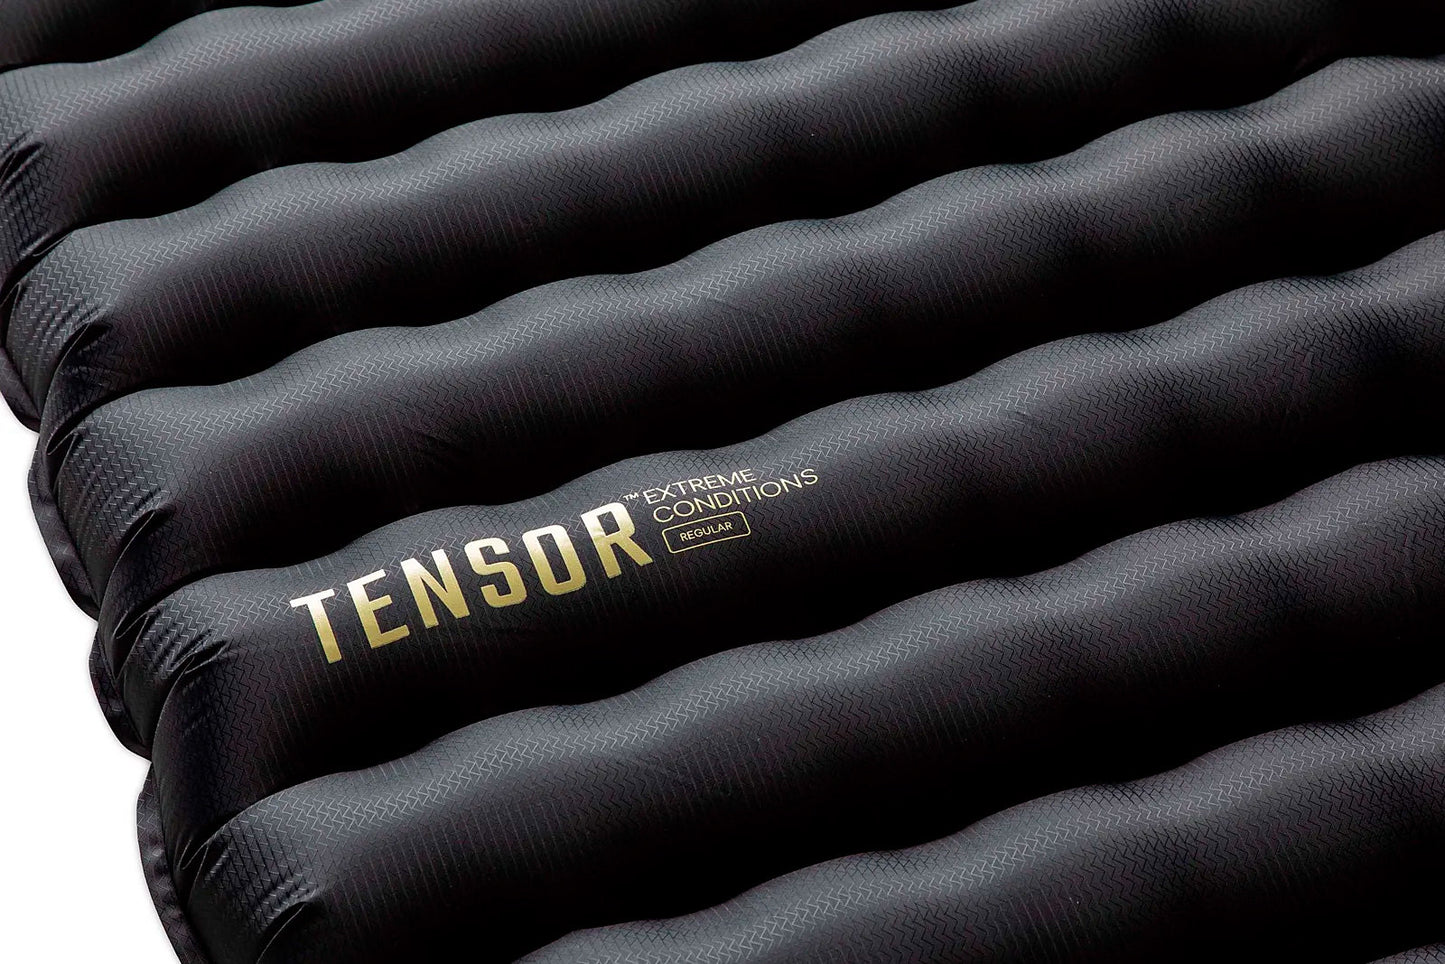 NEMO - Tensor Extreme Conditions Ultralight Insulated Sleeping Pad - Regular/Wide